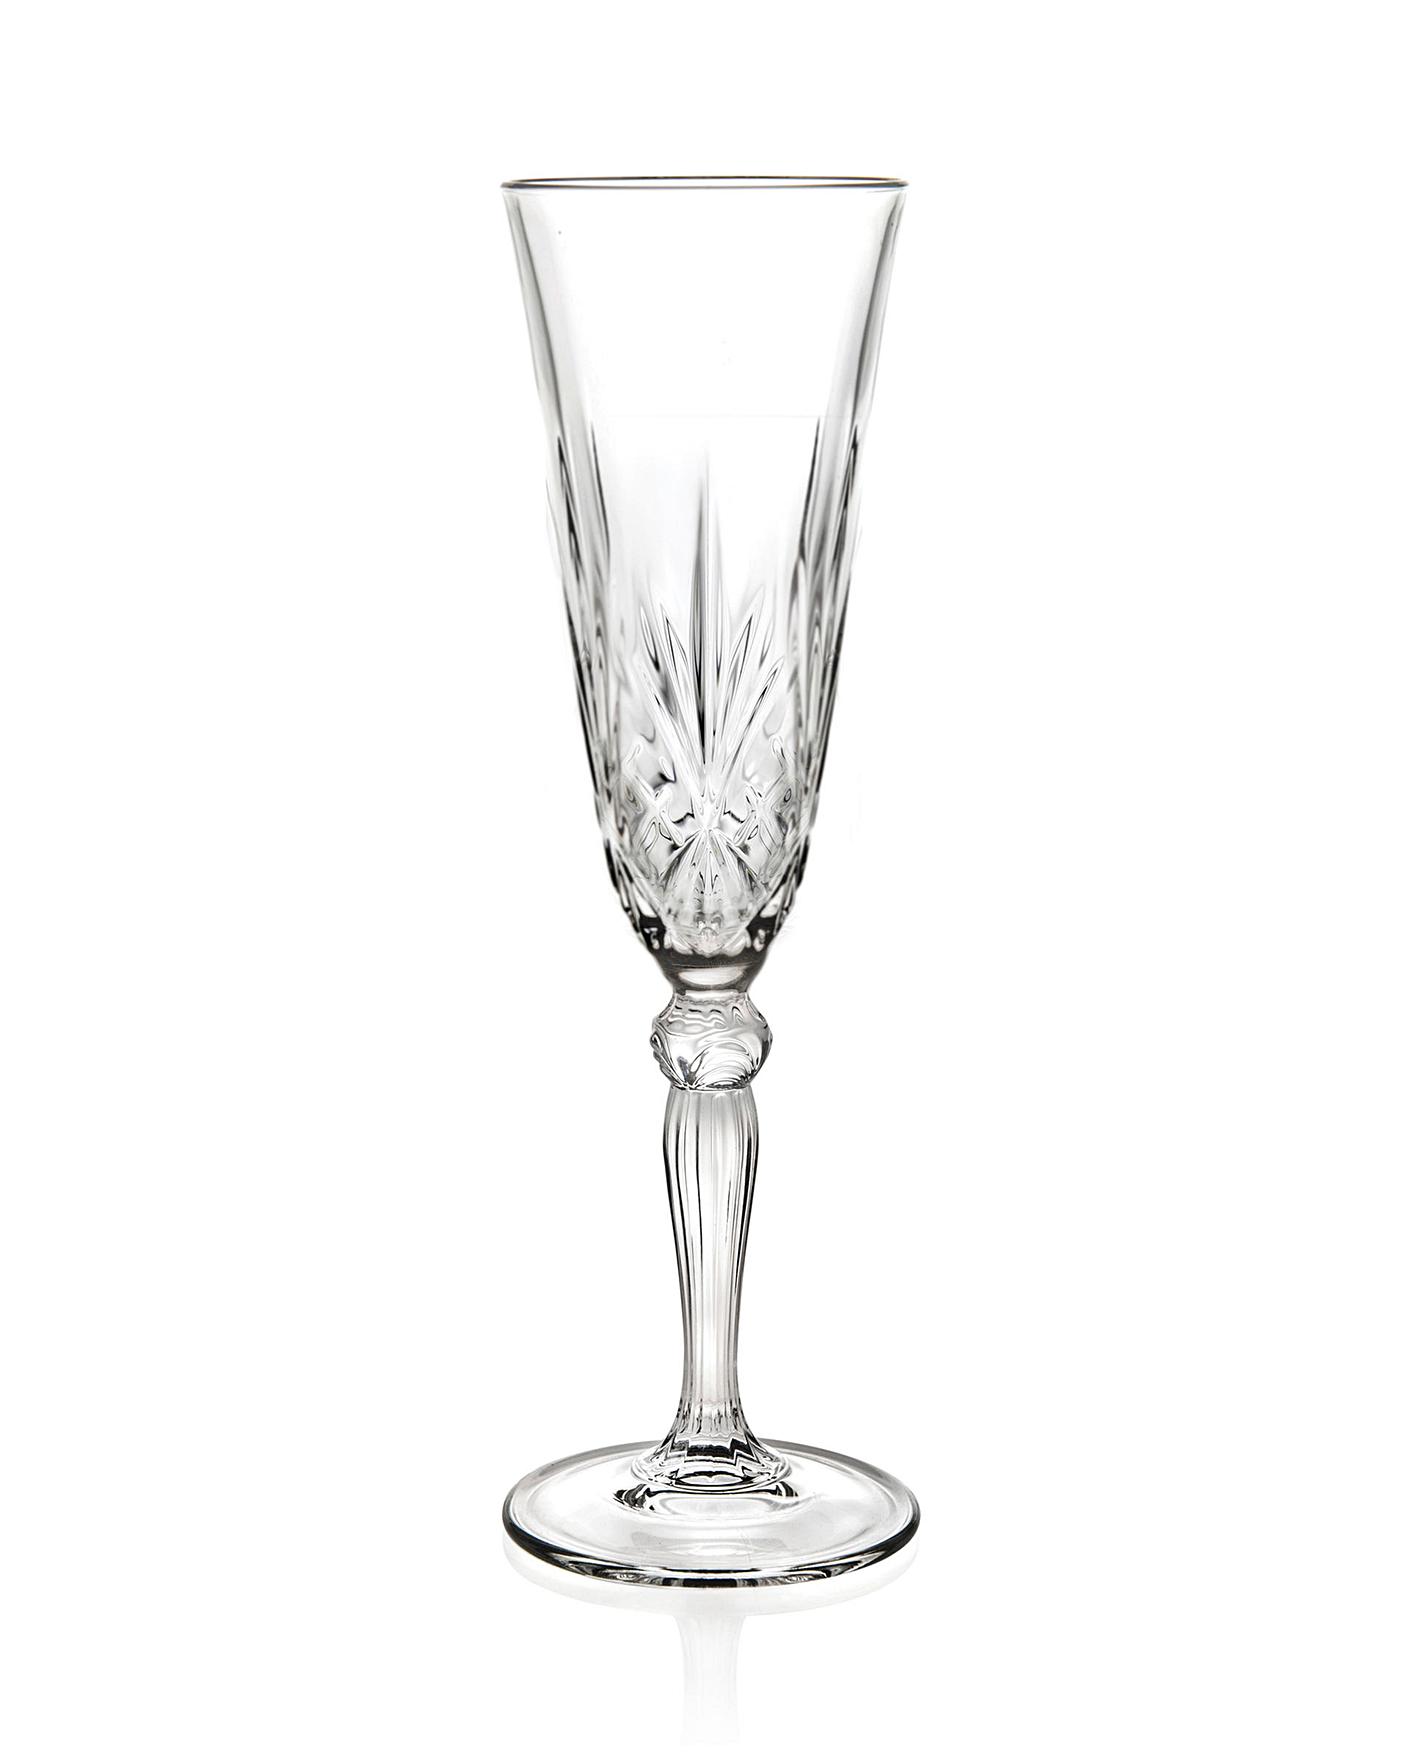 RCR Melodia Crystal Wine Glass set of 6